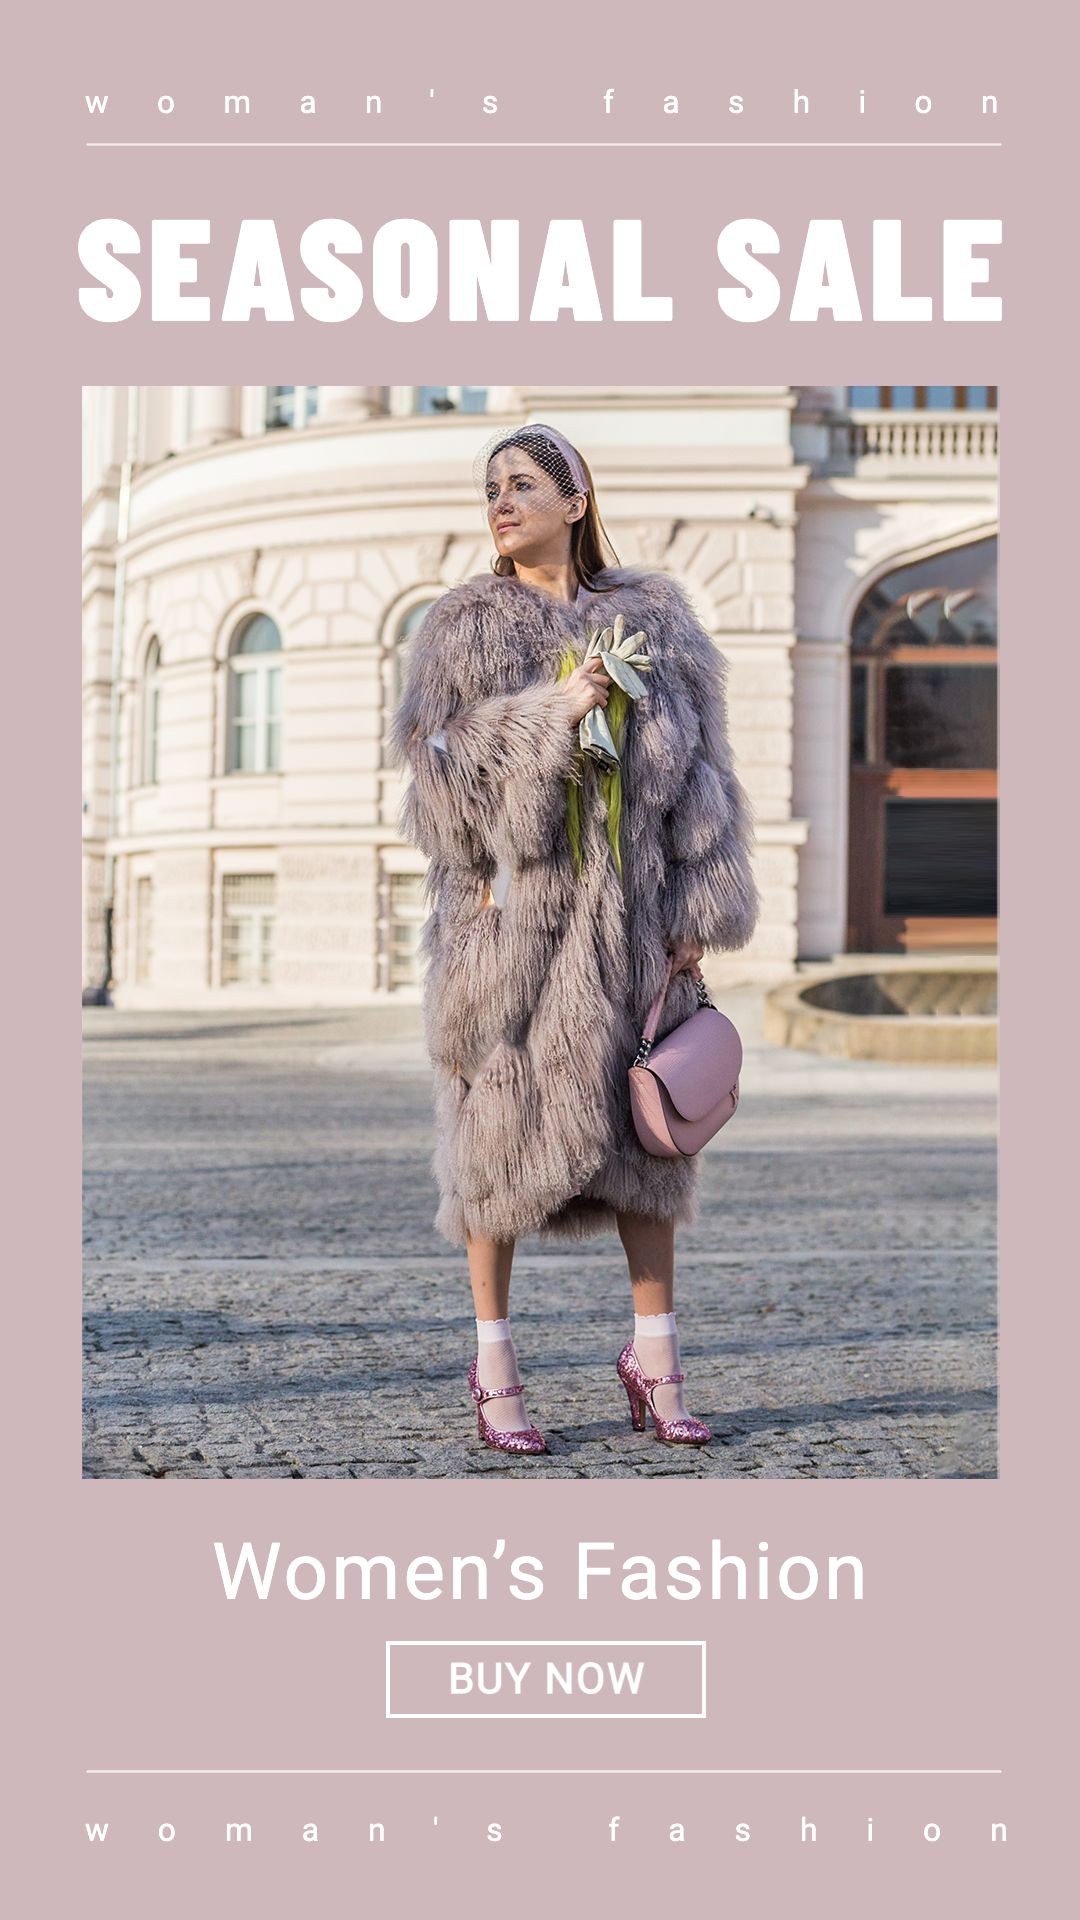 Fur Coat Street Photo Women's Fashion Sale Promotion Ecommerce Story预览效果